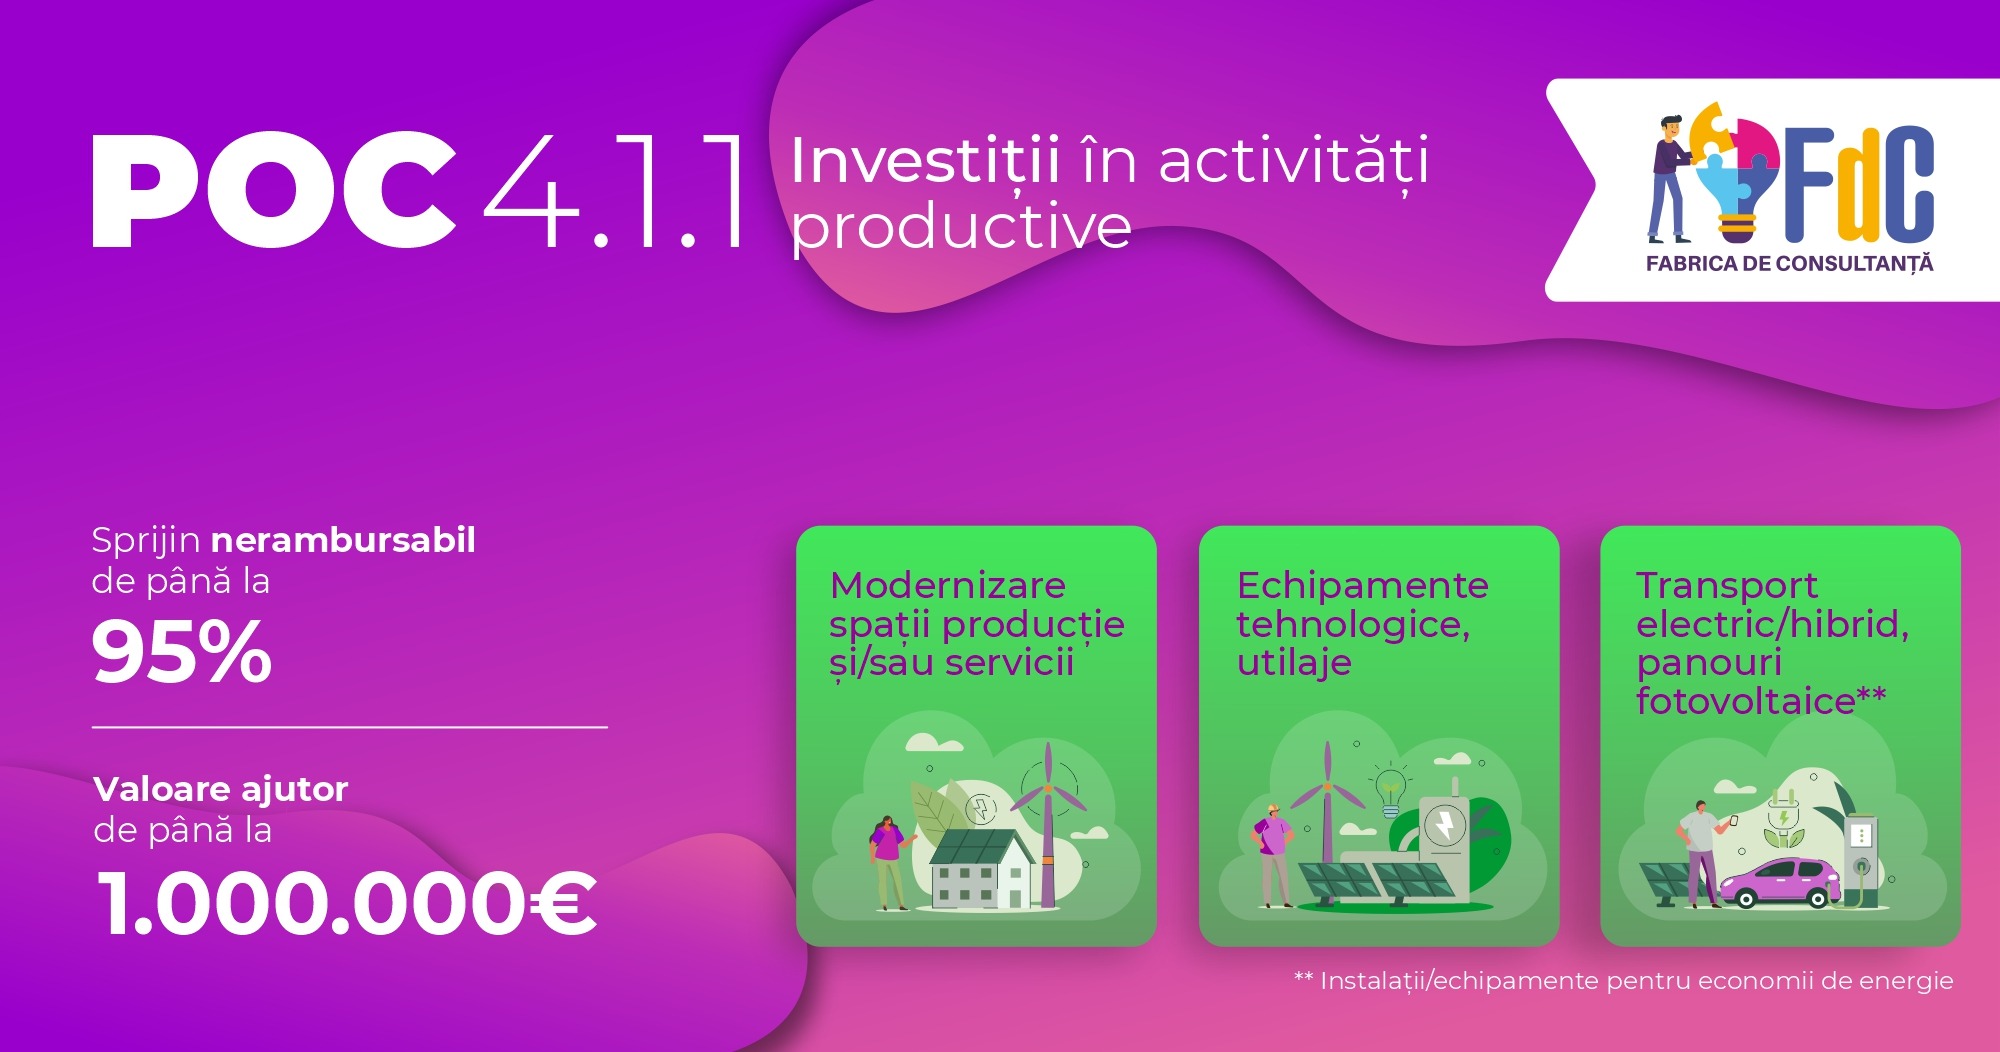 Actiunea-4.1.1-POC-investitii-in-activitati-productive